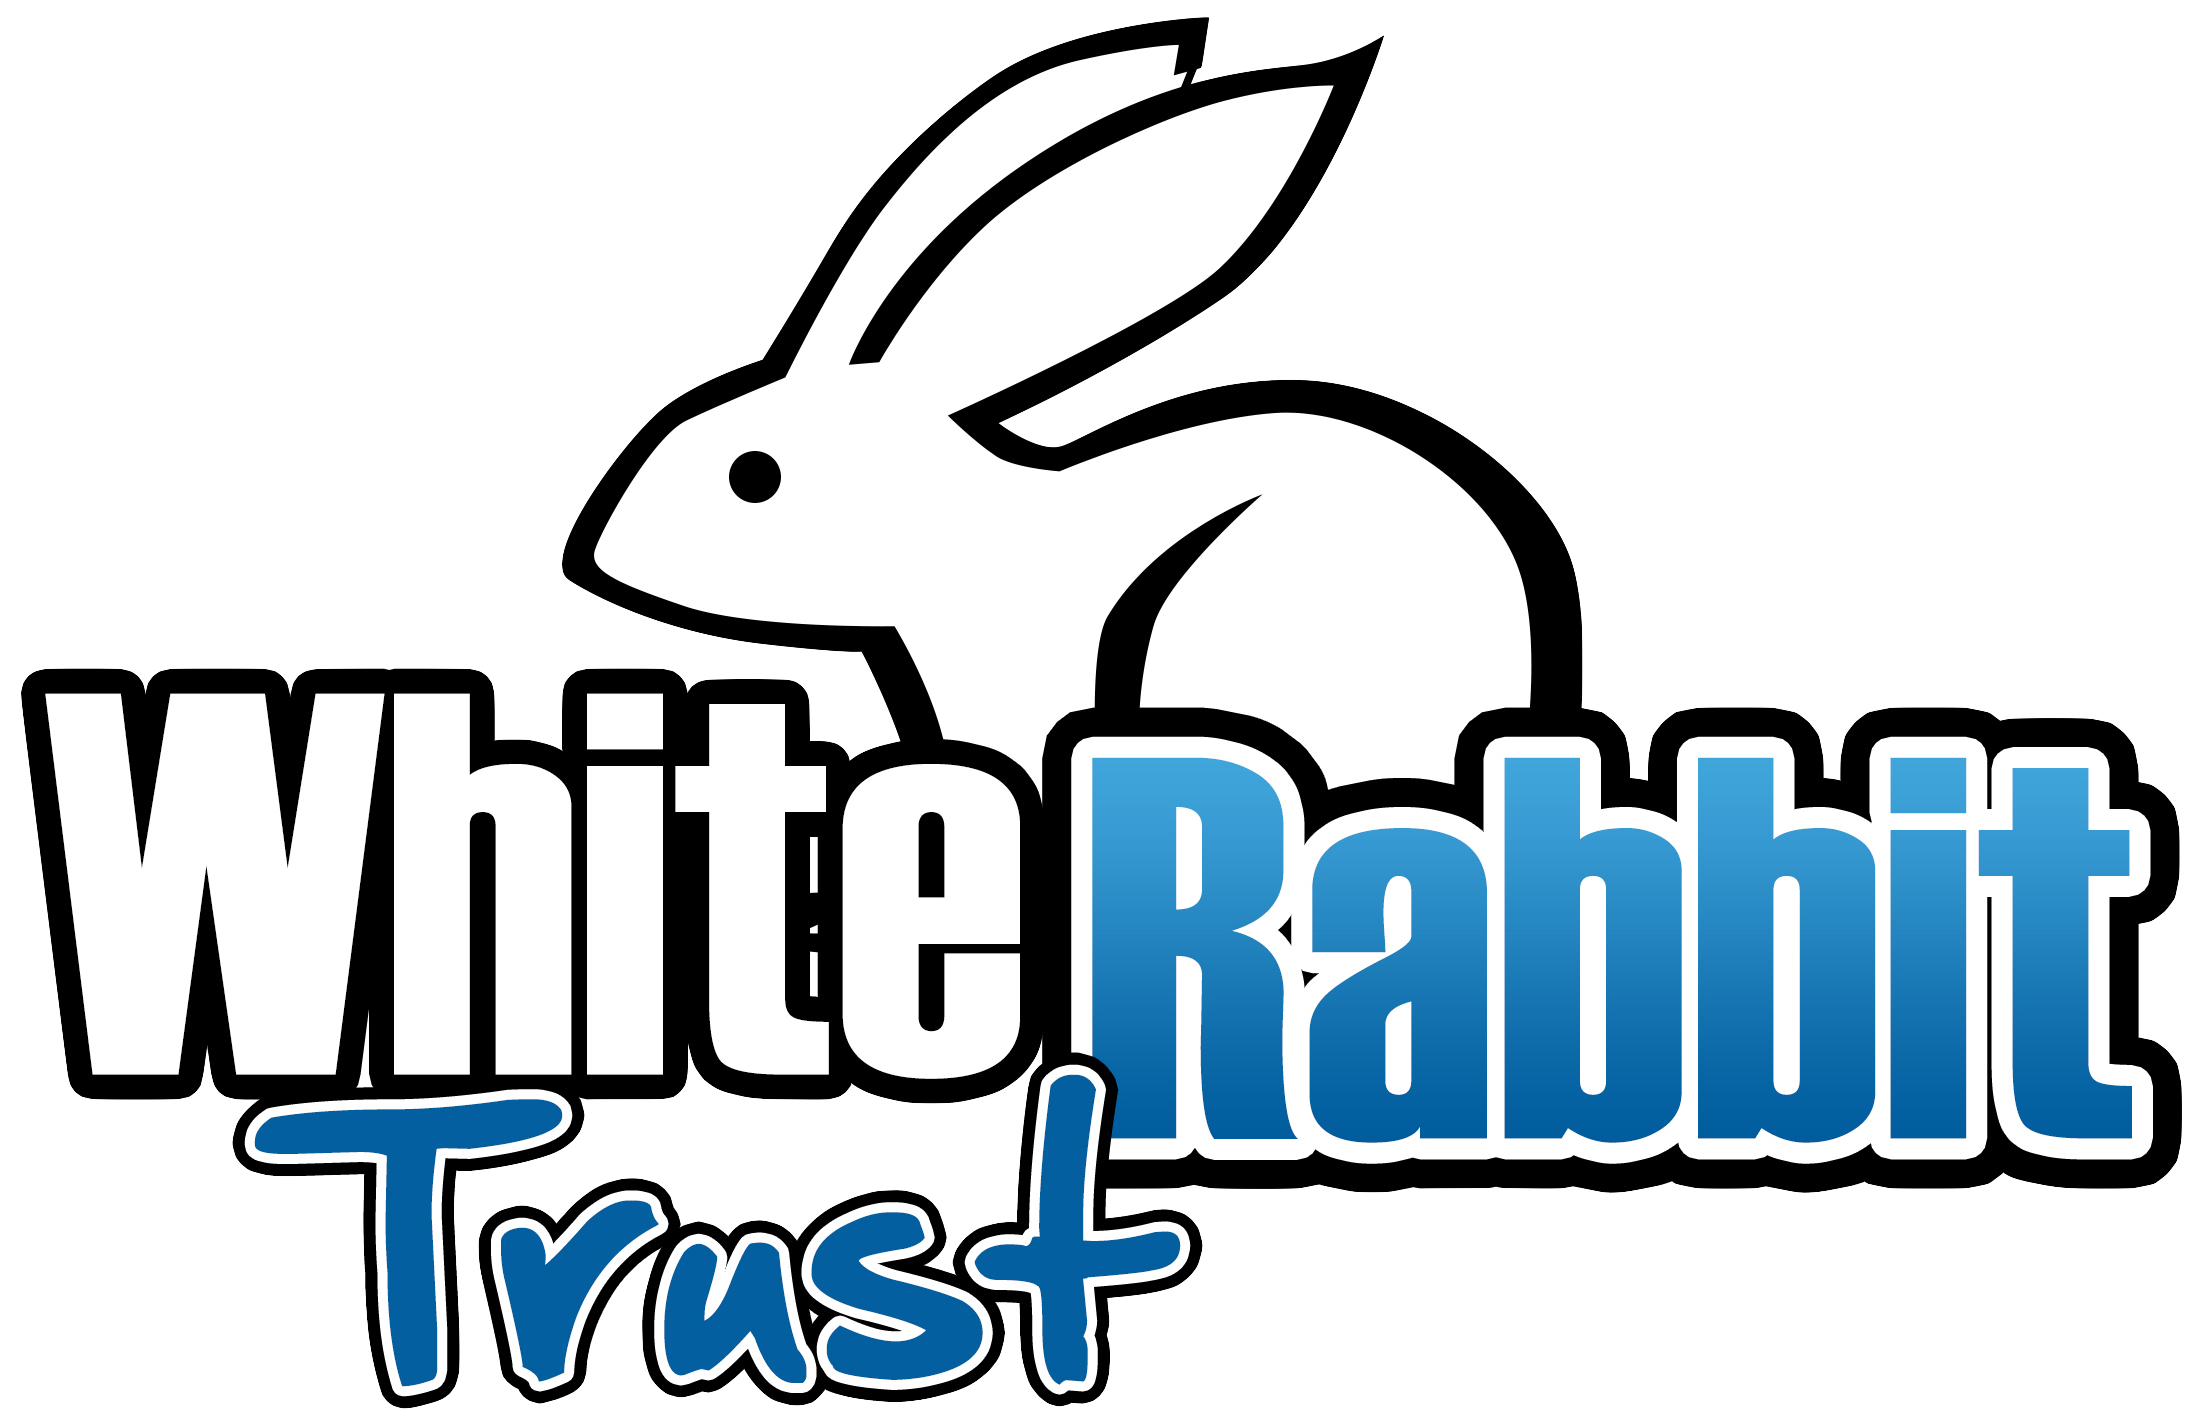 White Rabbit Trust